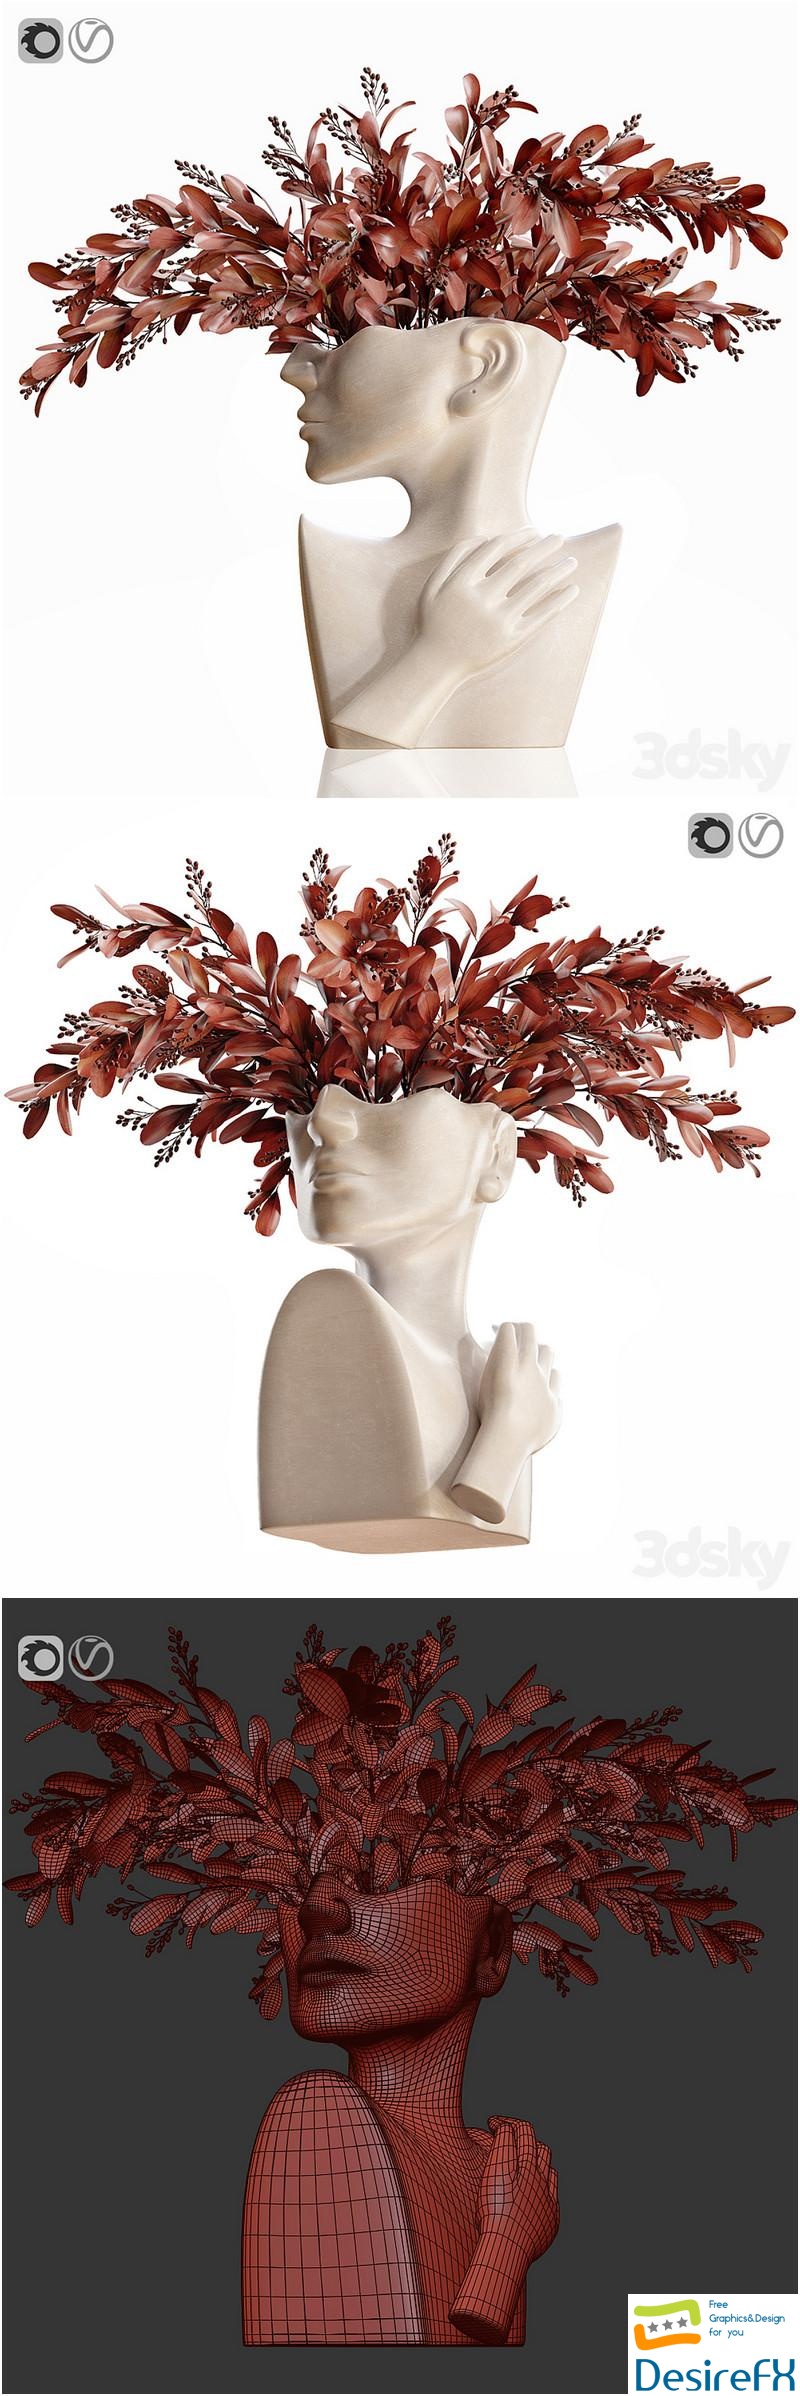 Human face art vase 3D Model